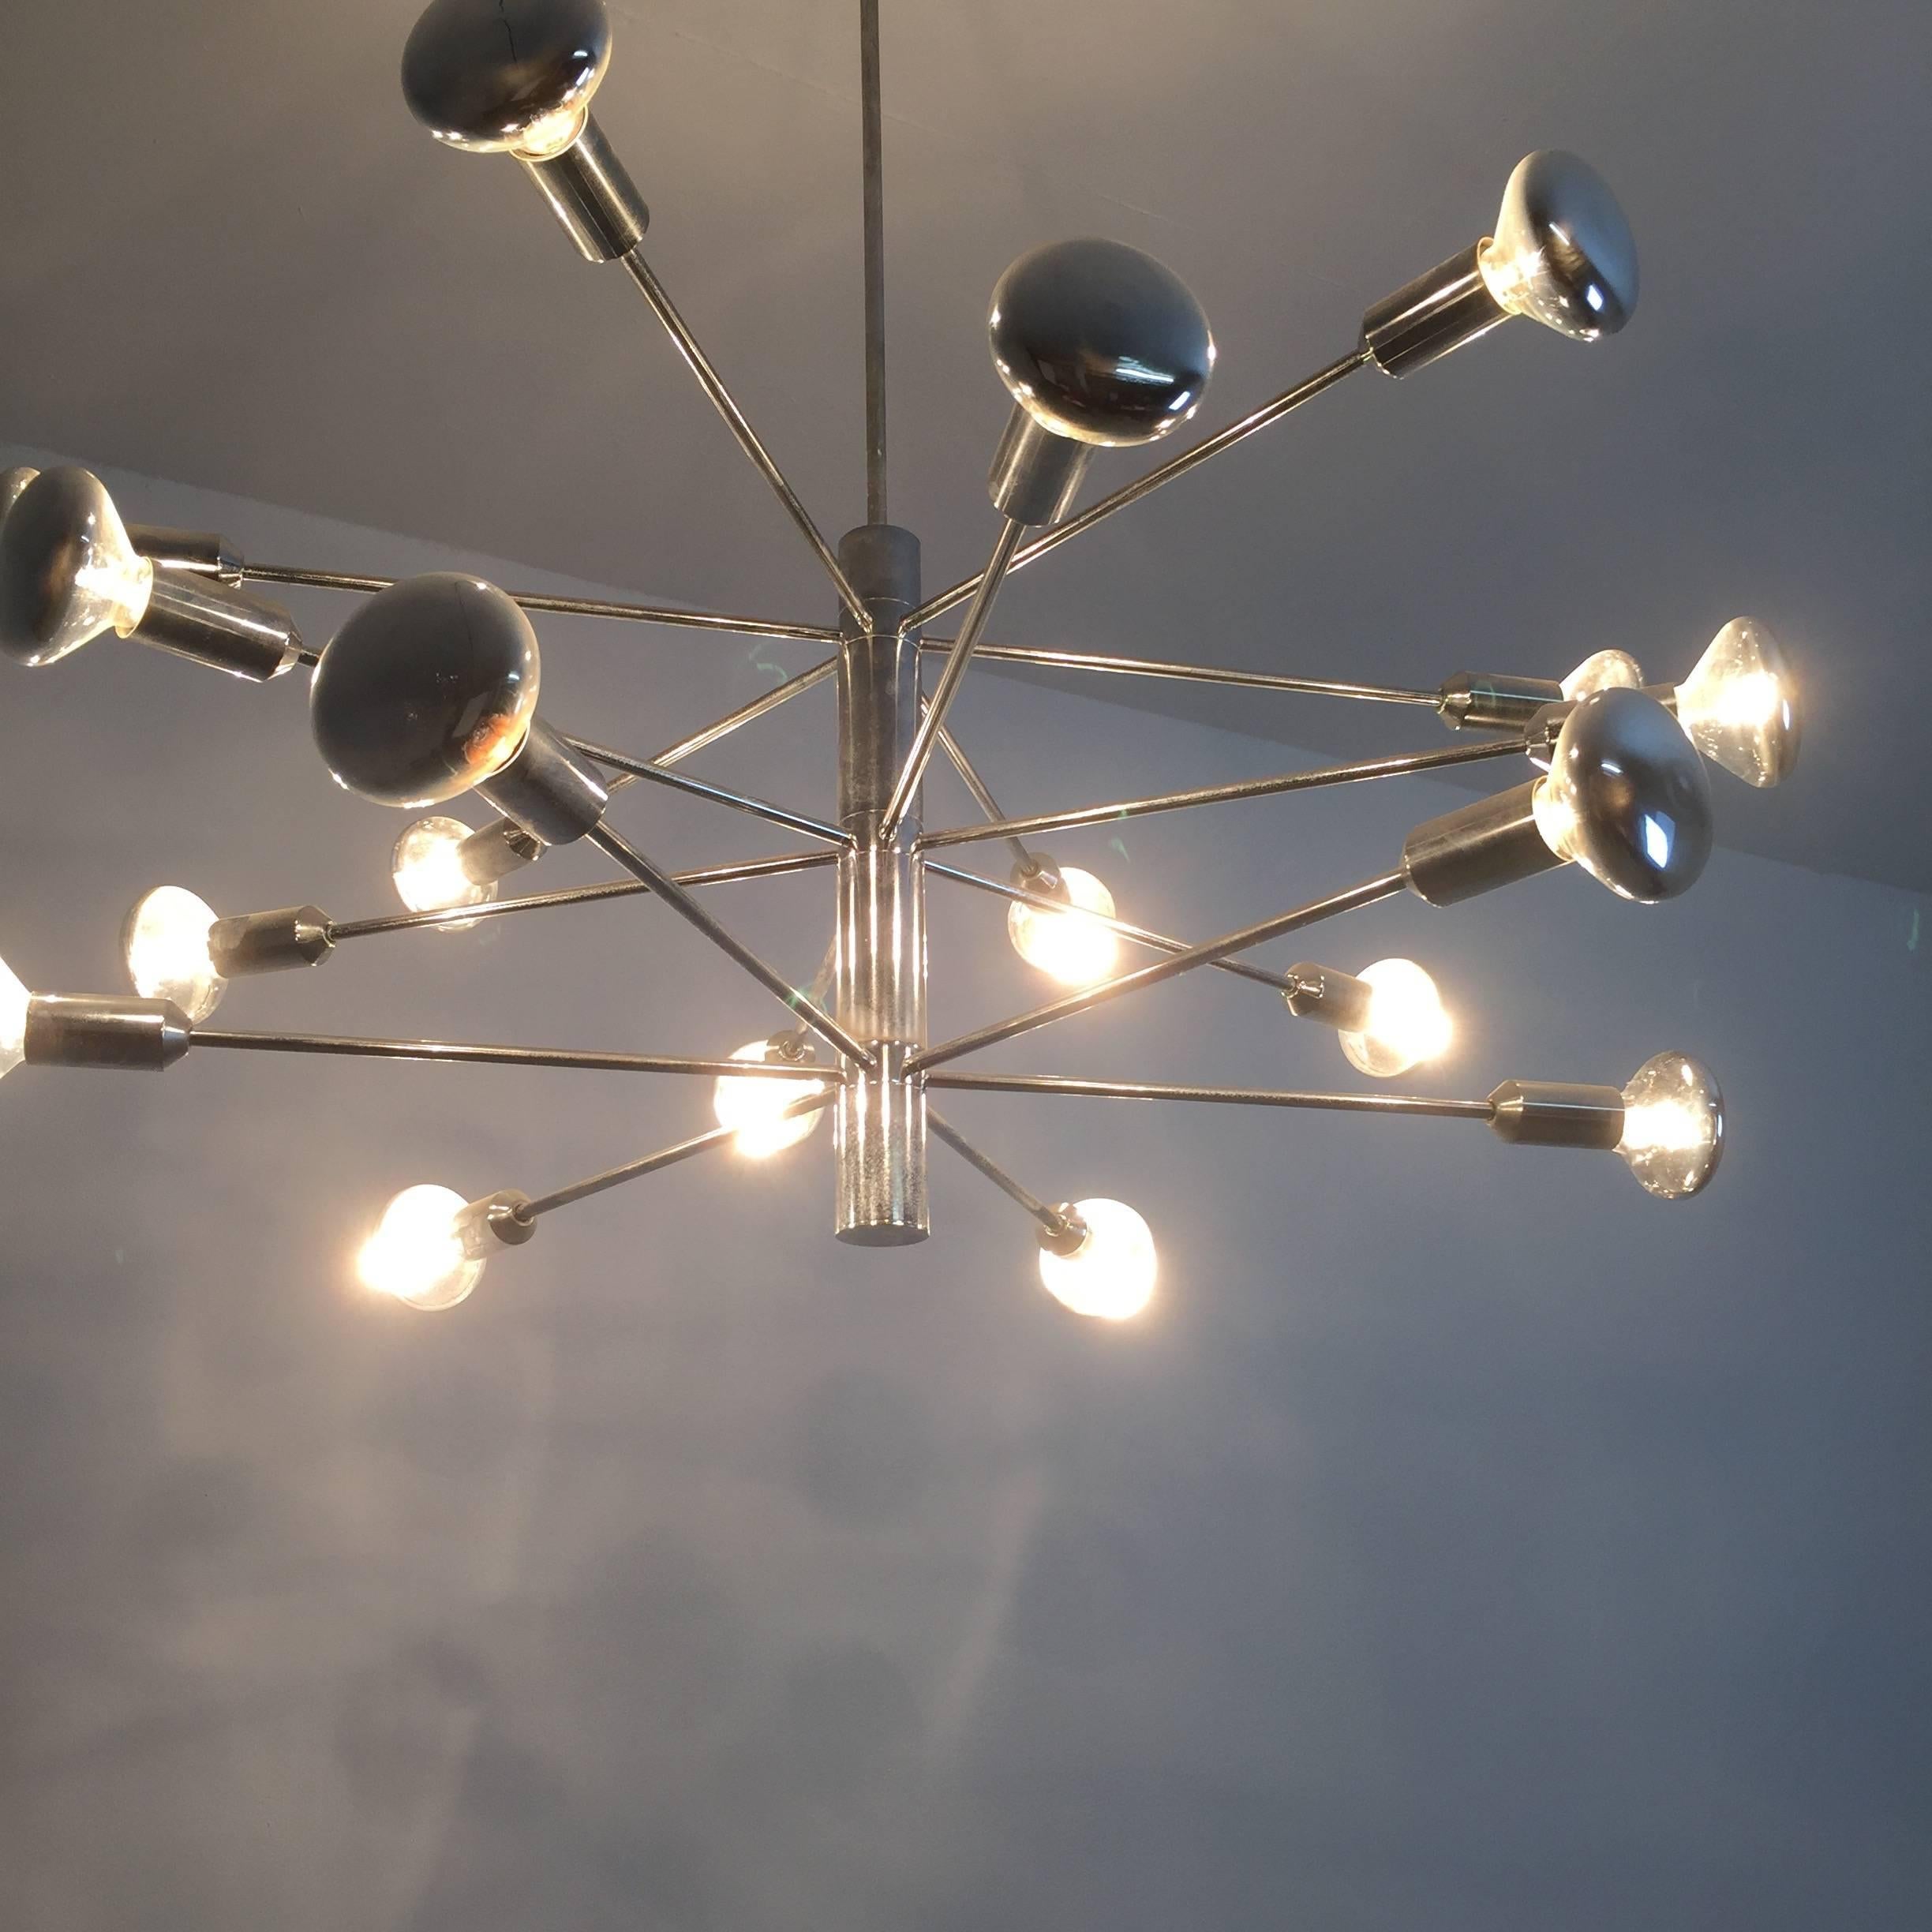 20th Century Modernist Chrome Sputnik Hanging Light by Cosack Lights, 1960s, Germany For Sale